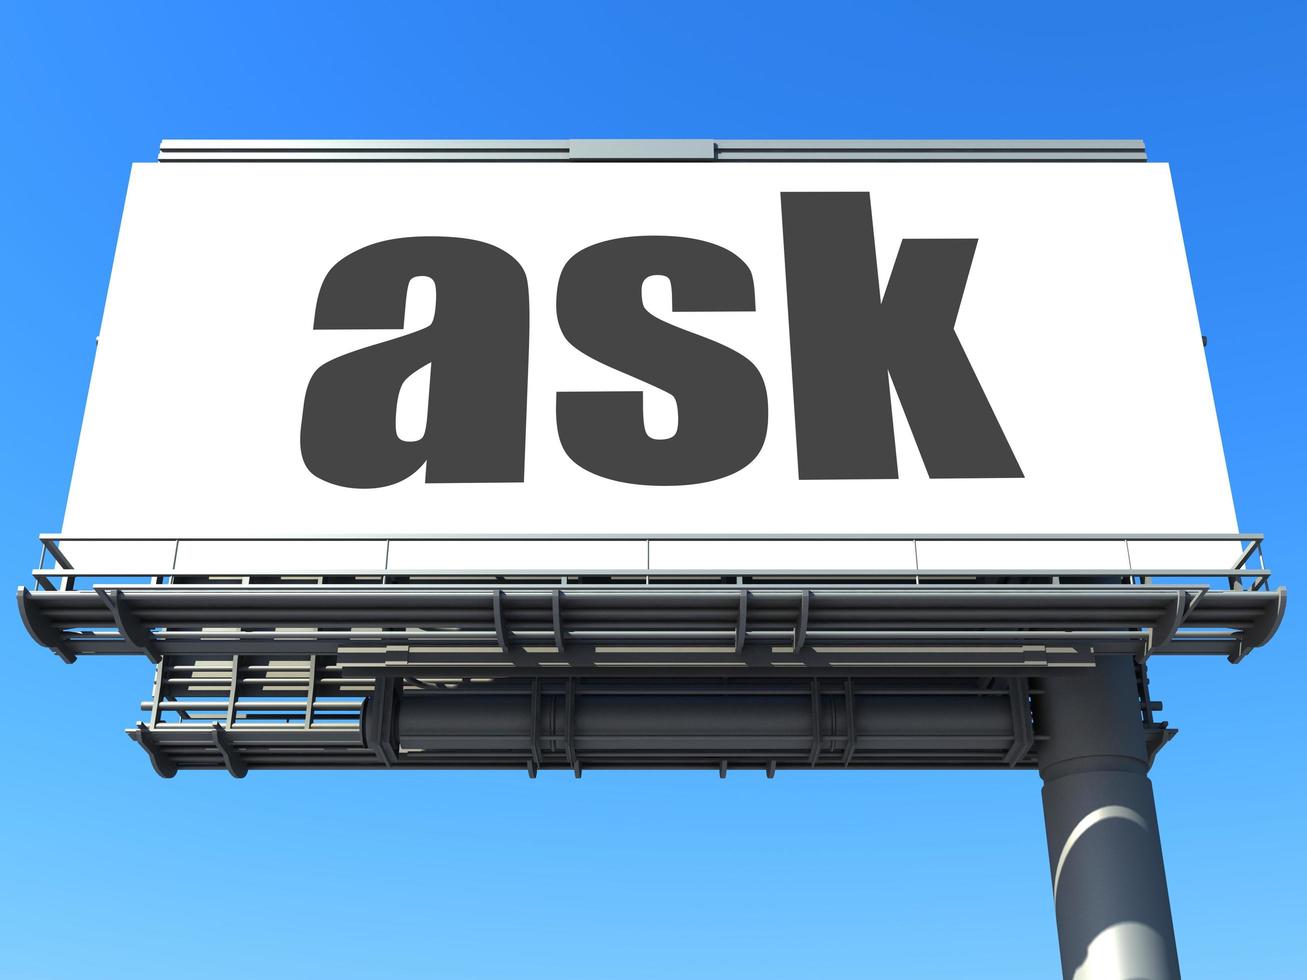 ask word on billboard photo